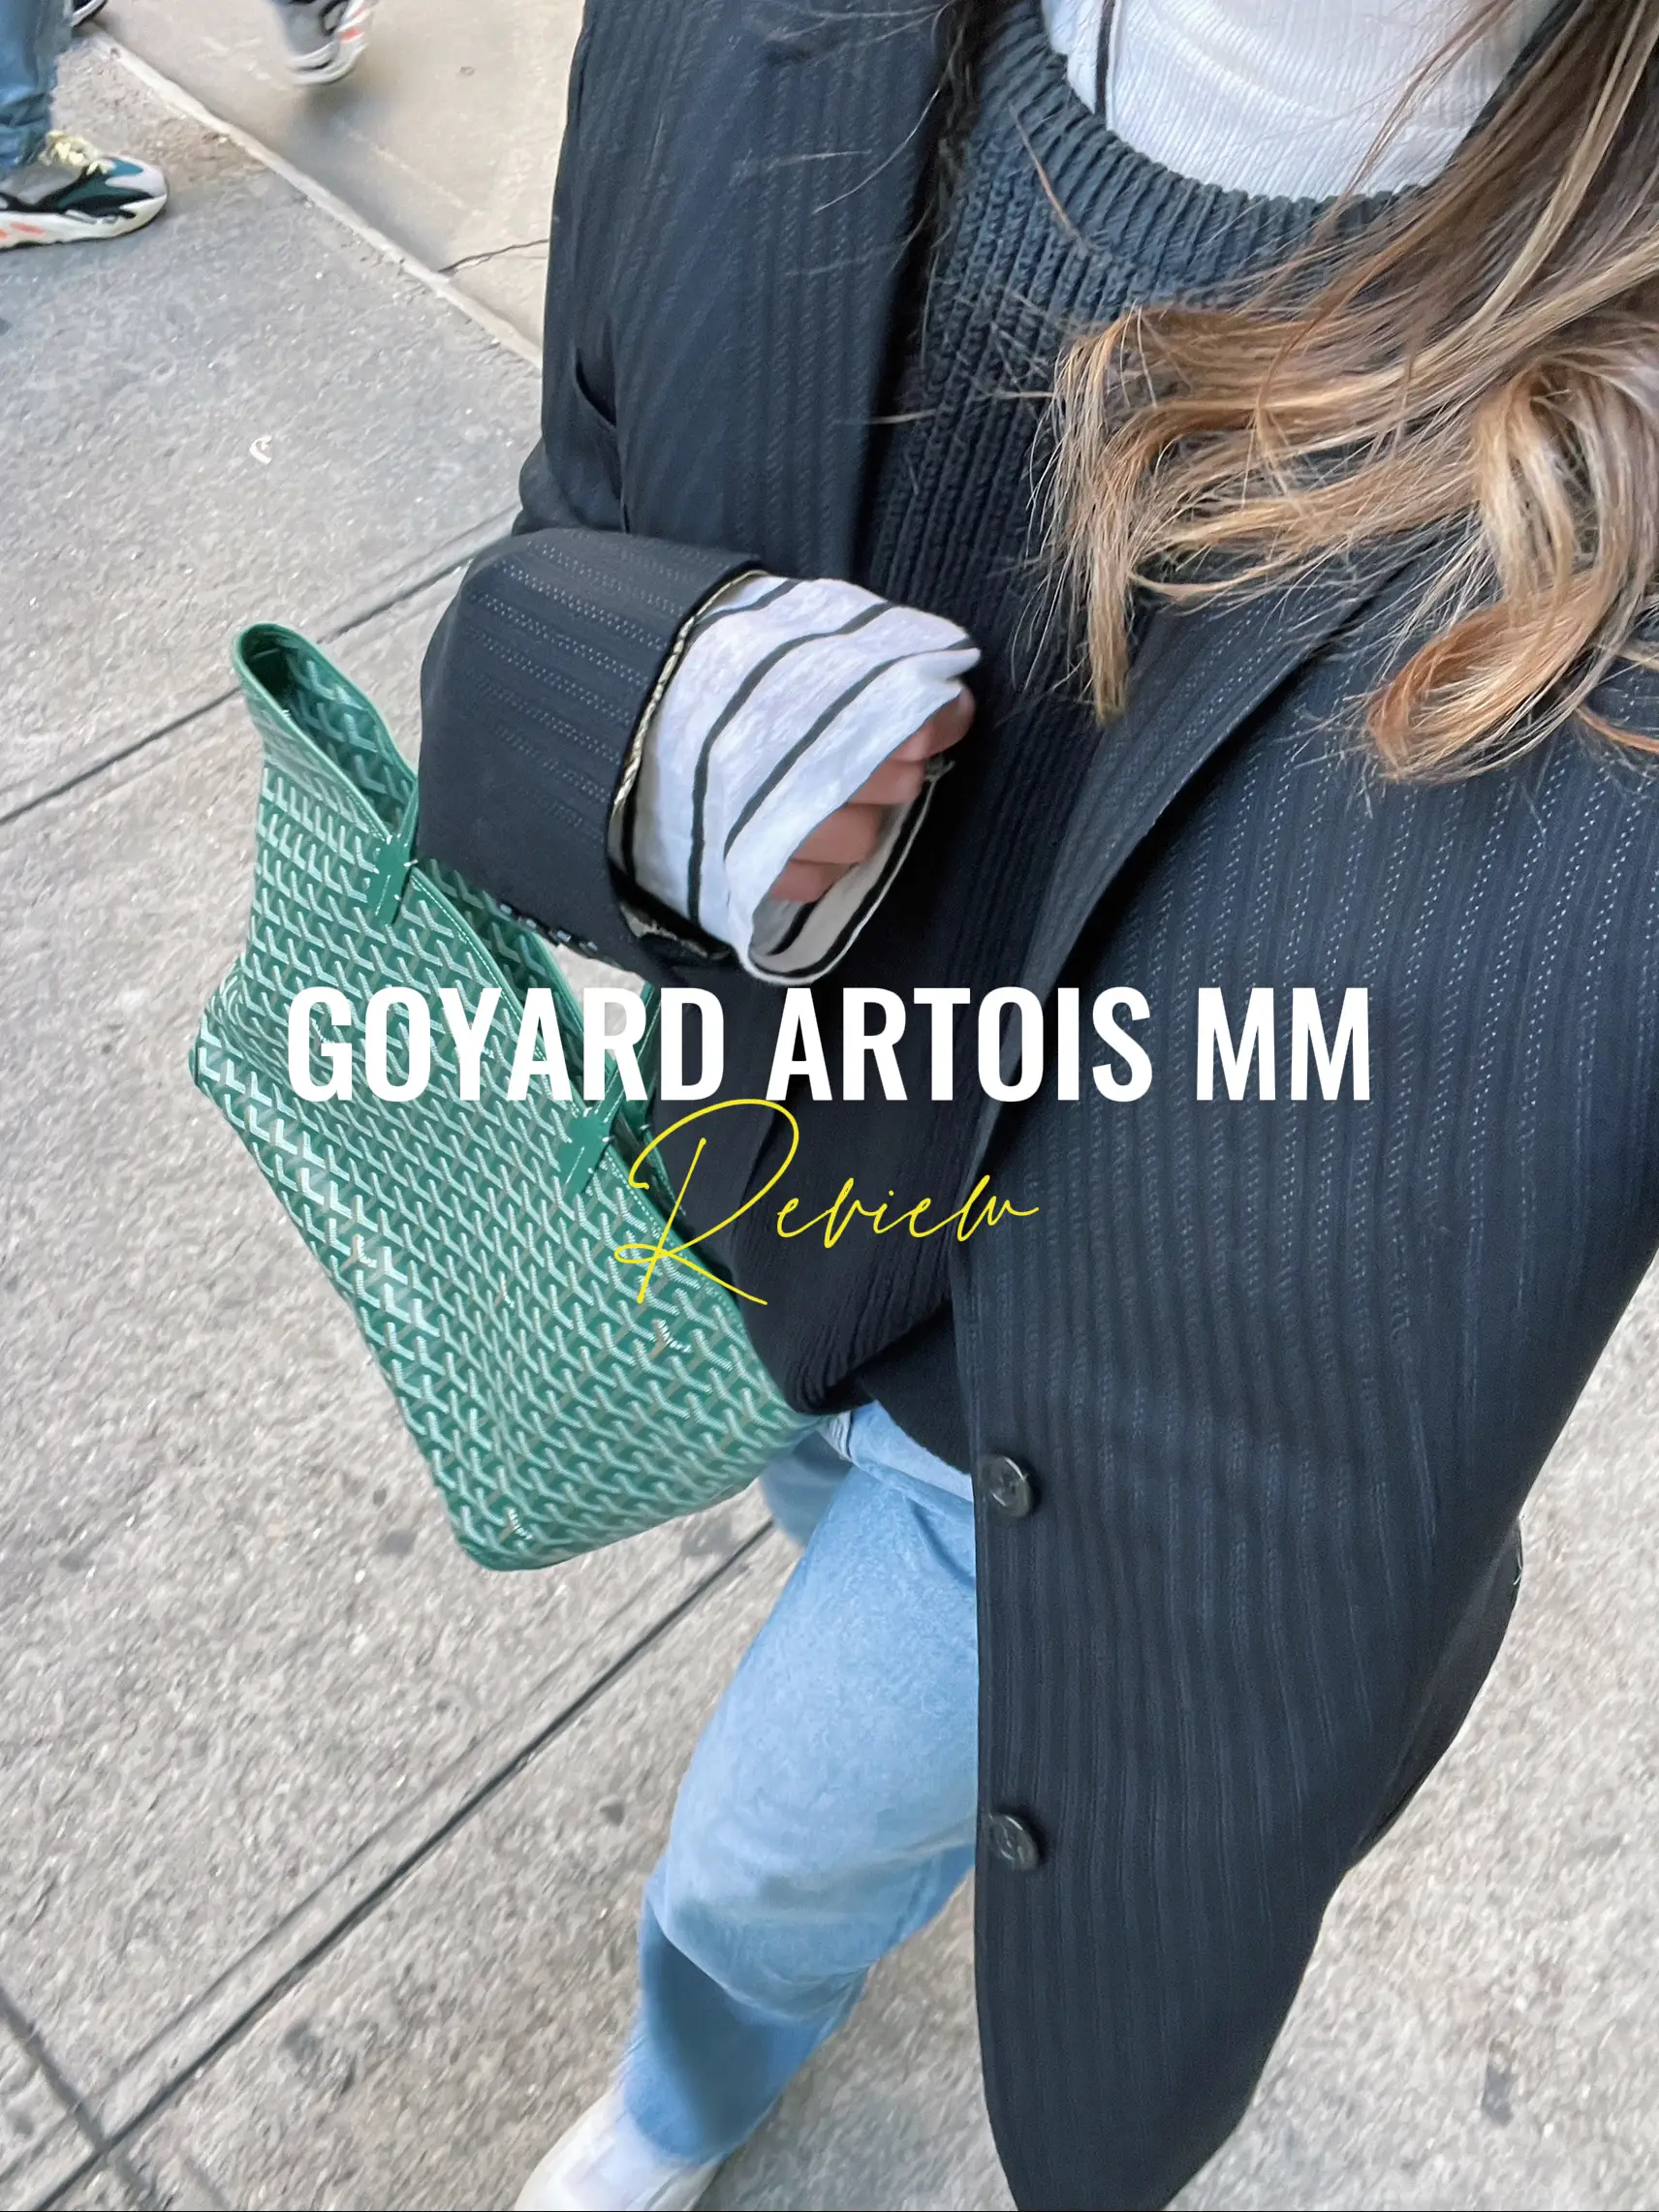 My full review on the Goyard Artois MM in green!